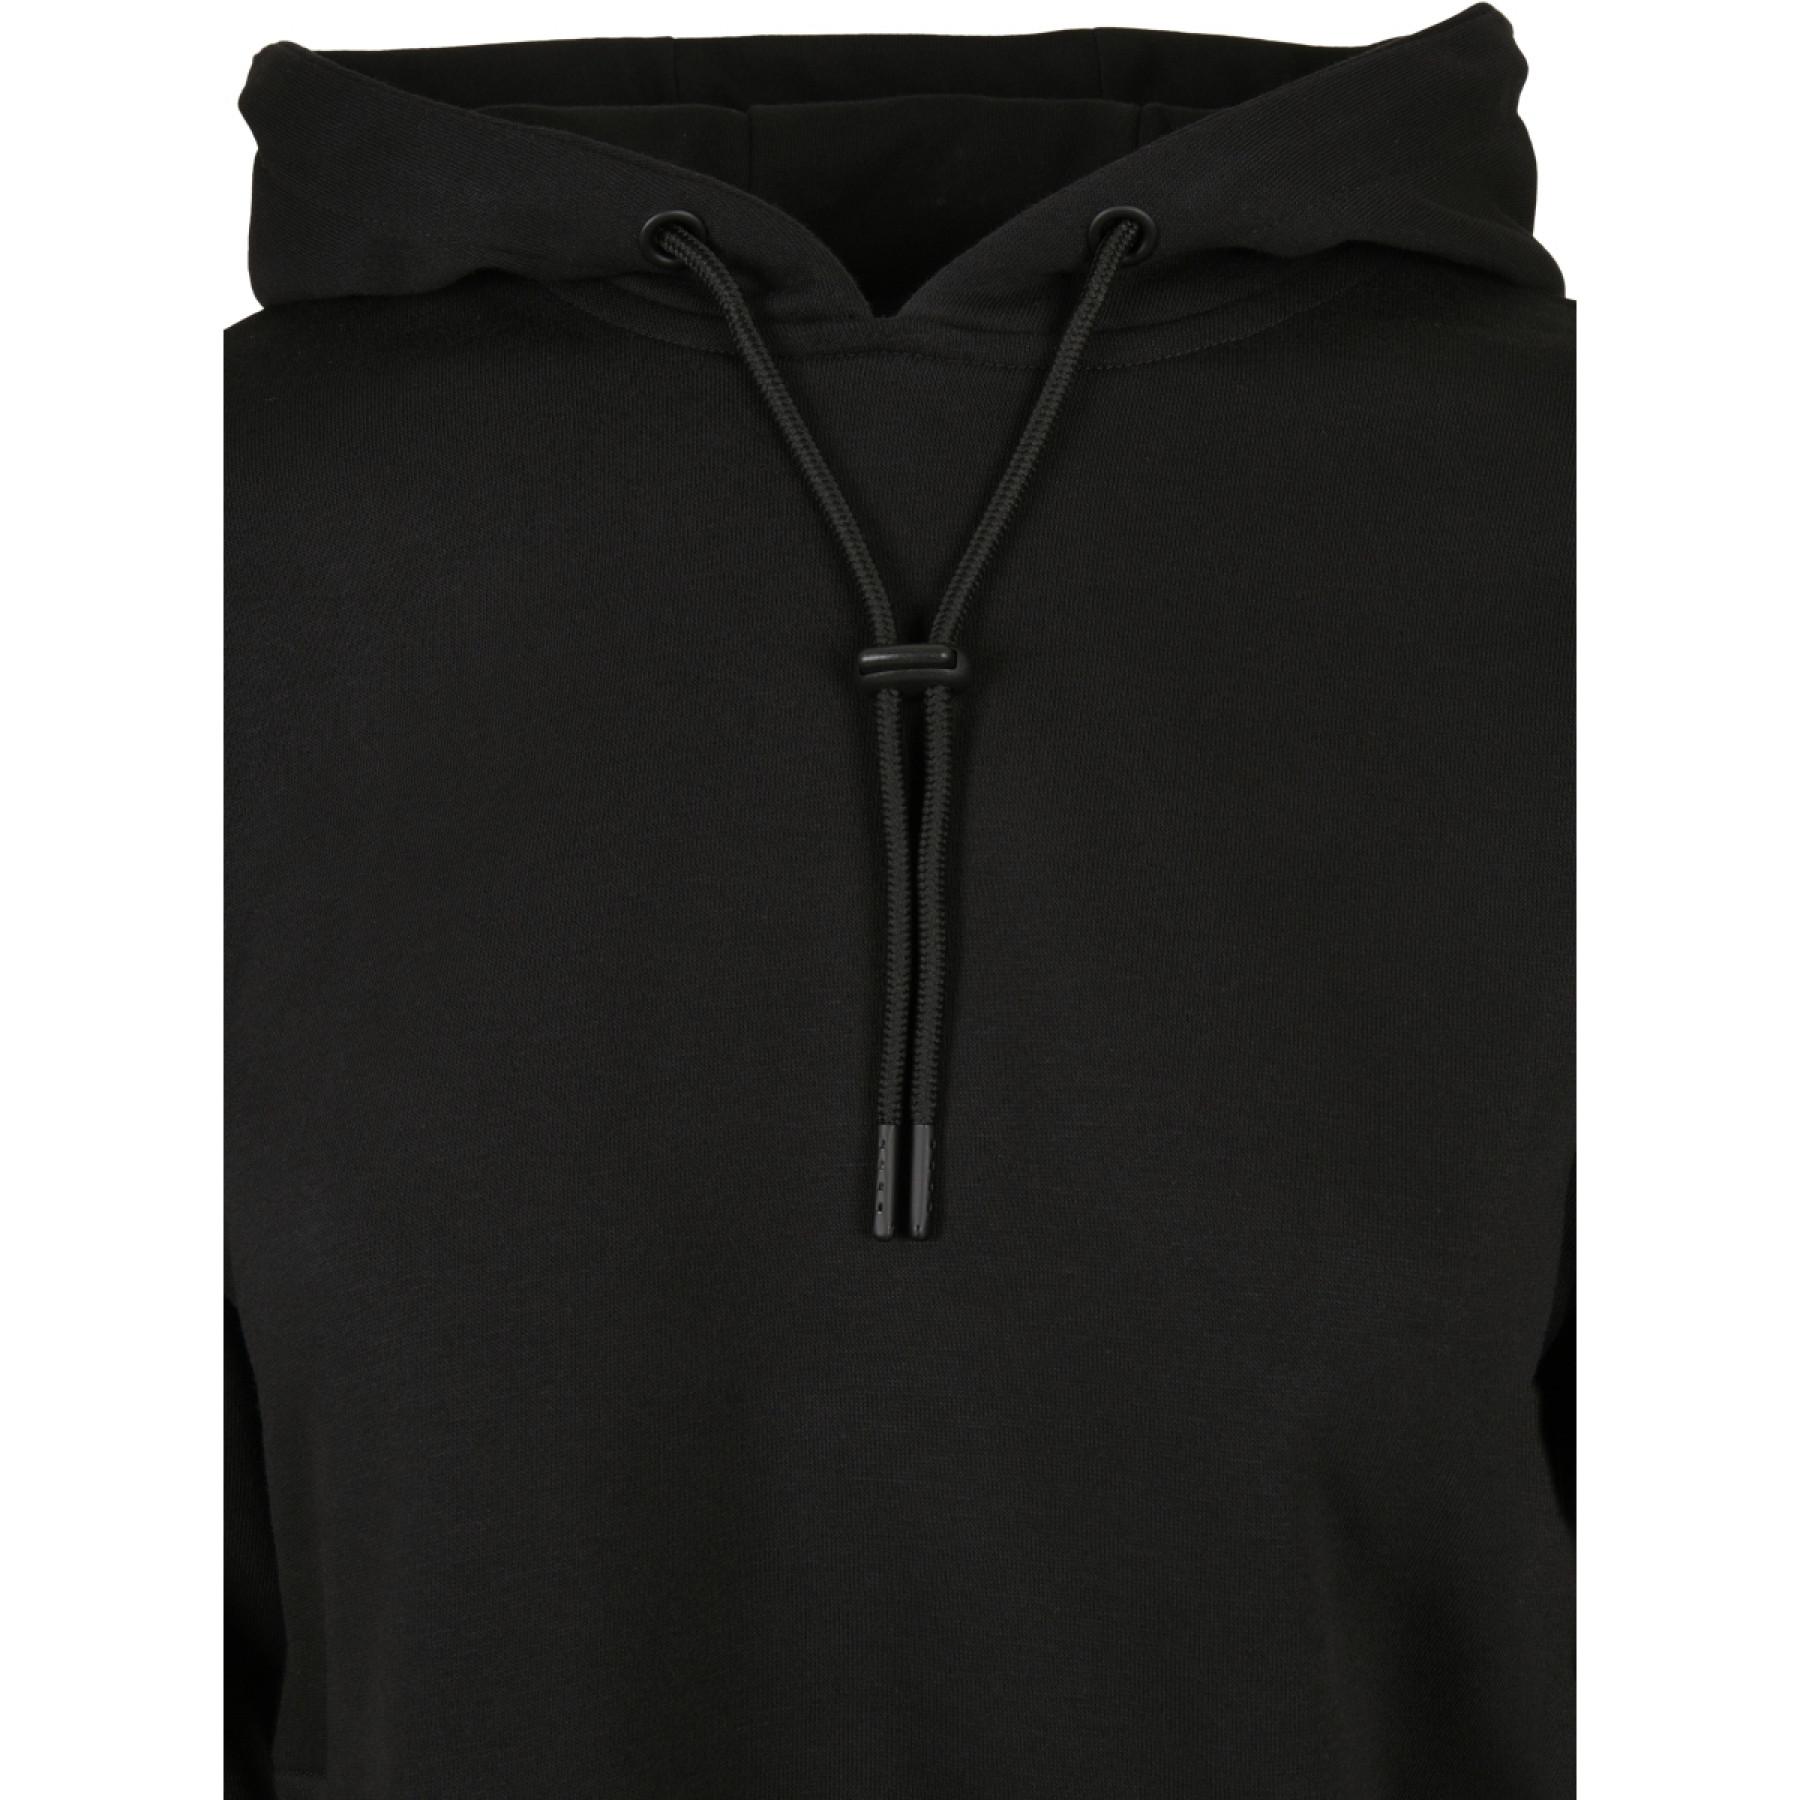 Women's hooded sweatshirt Urban Classics court terry- Large sizes